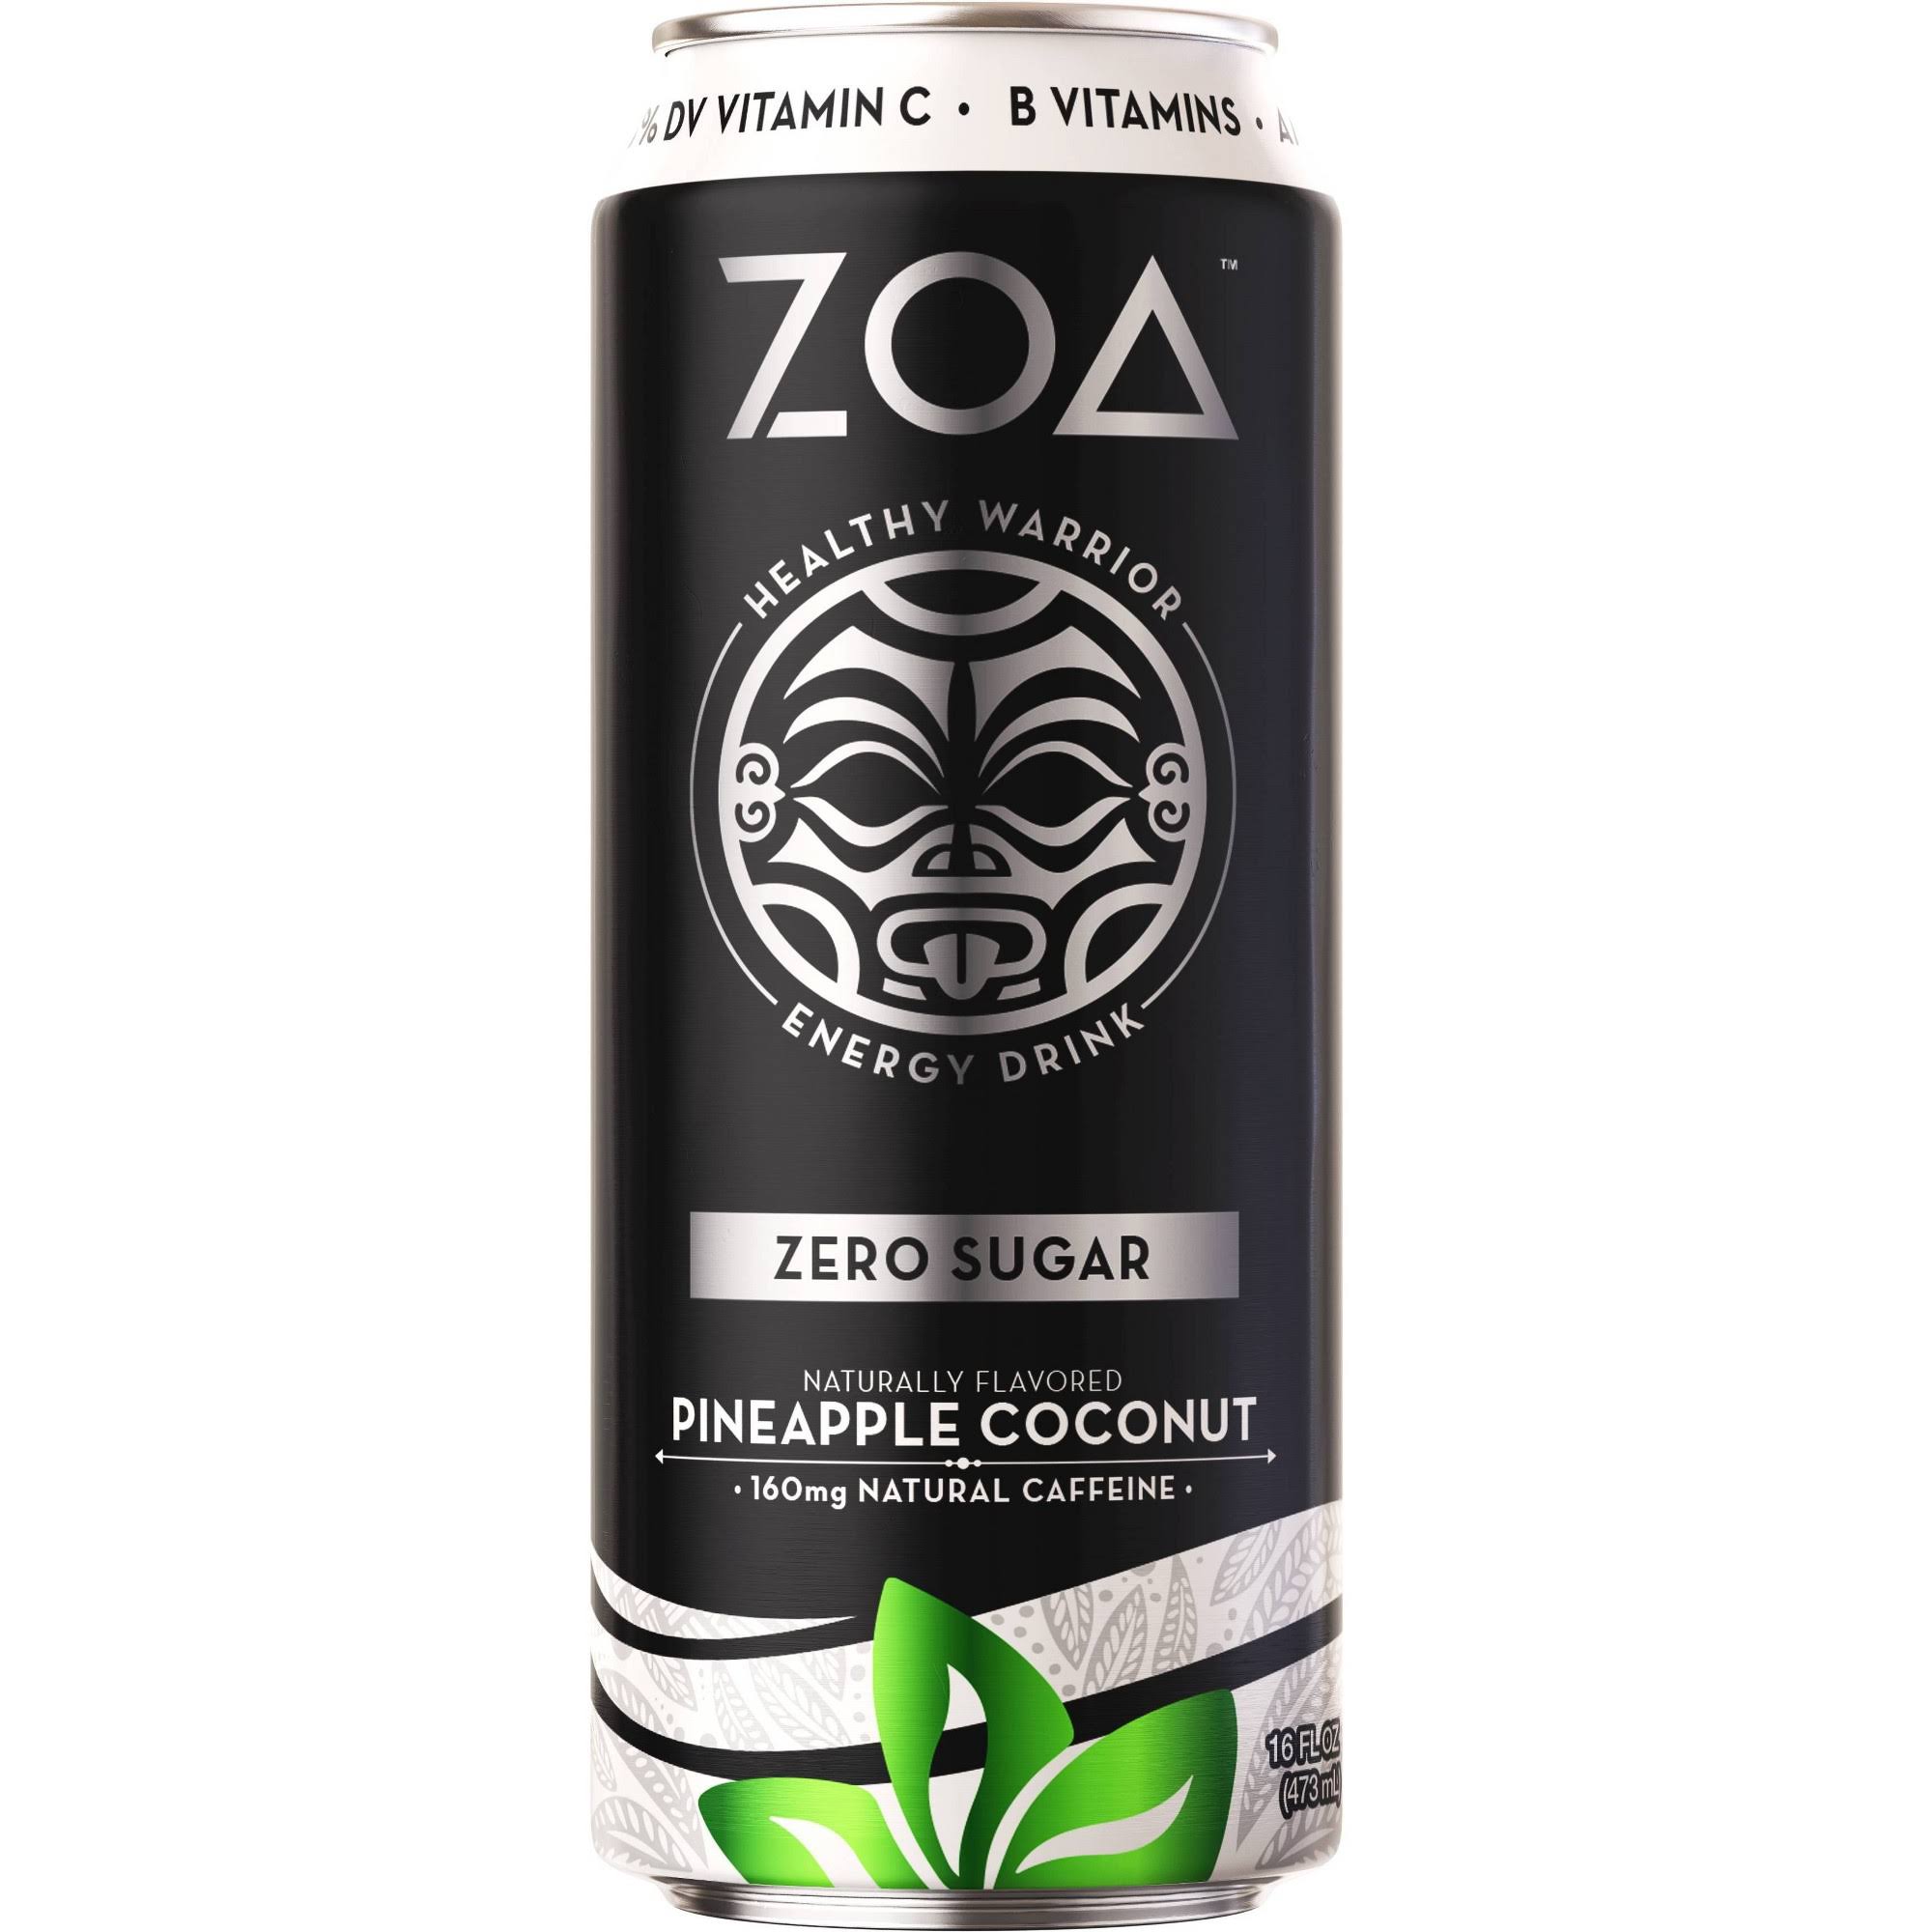 Zoa Energy Drink, Zero Sugar, Pineapple Coconut - 16 fl oz